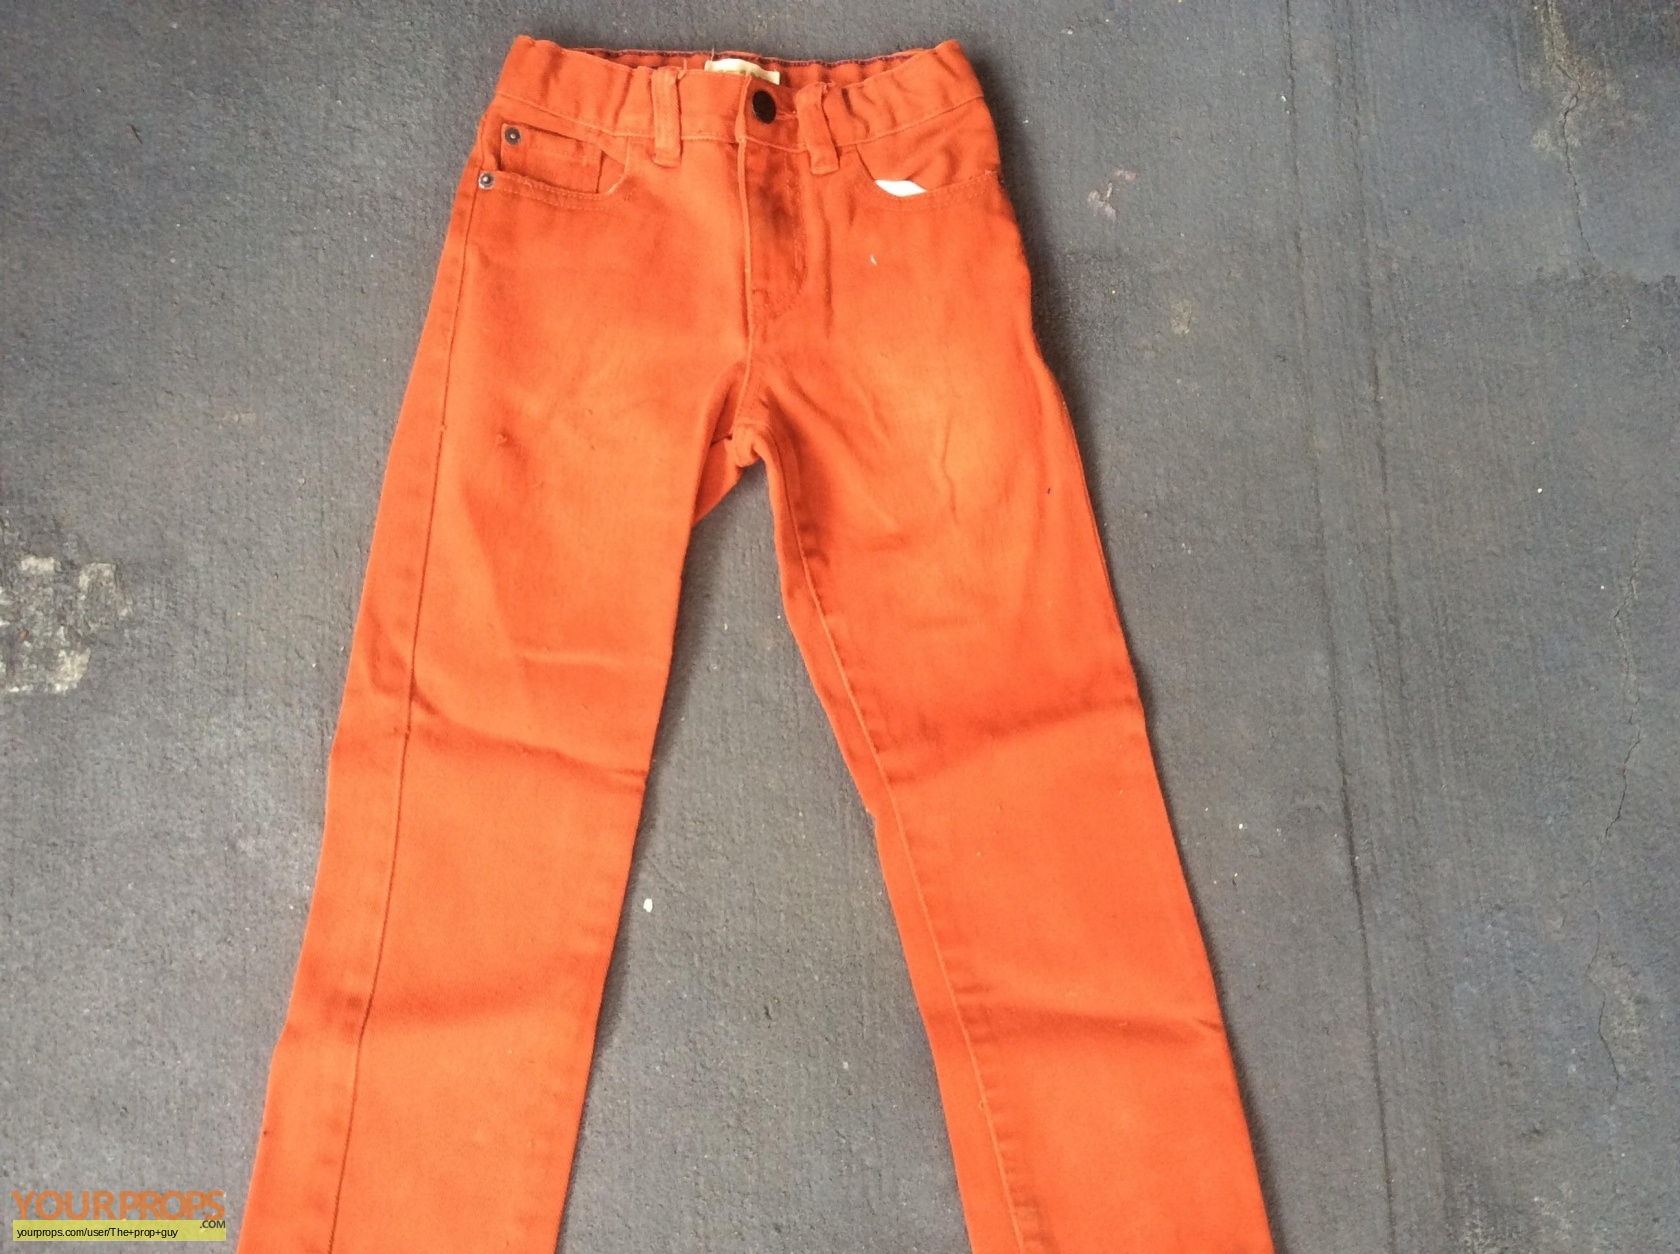 Poltergeist Orange/Red pants original movie costume